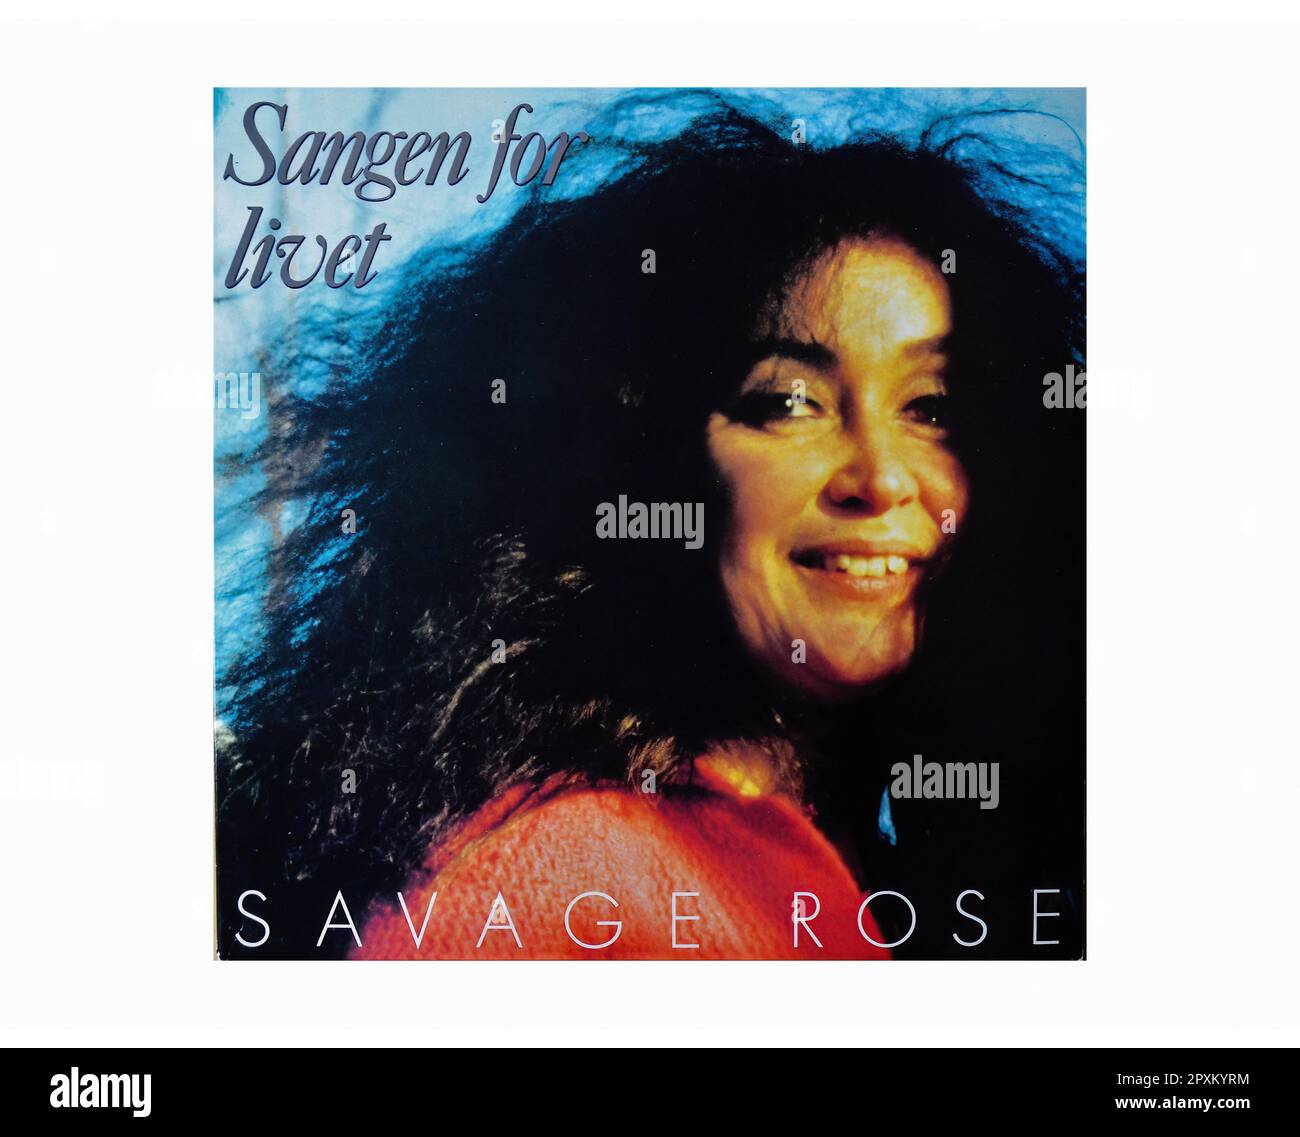 Savage Rose - For Livet - Vintage Music Vinyl Record Stock Photo -